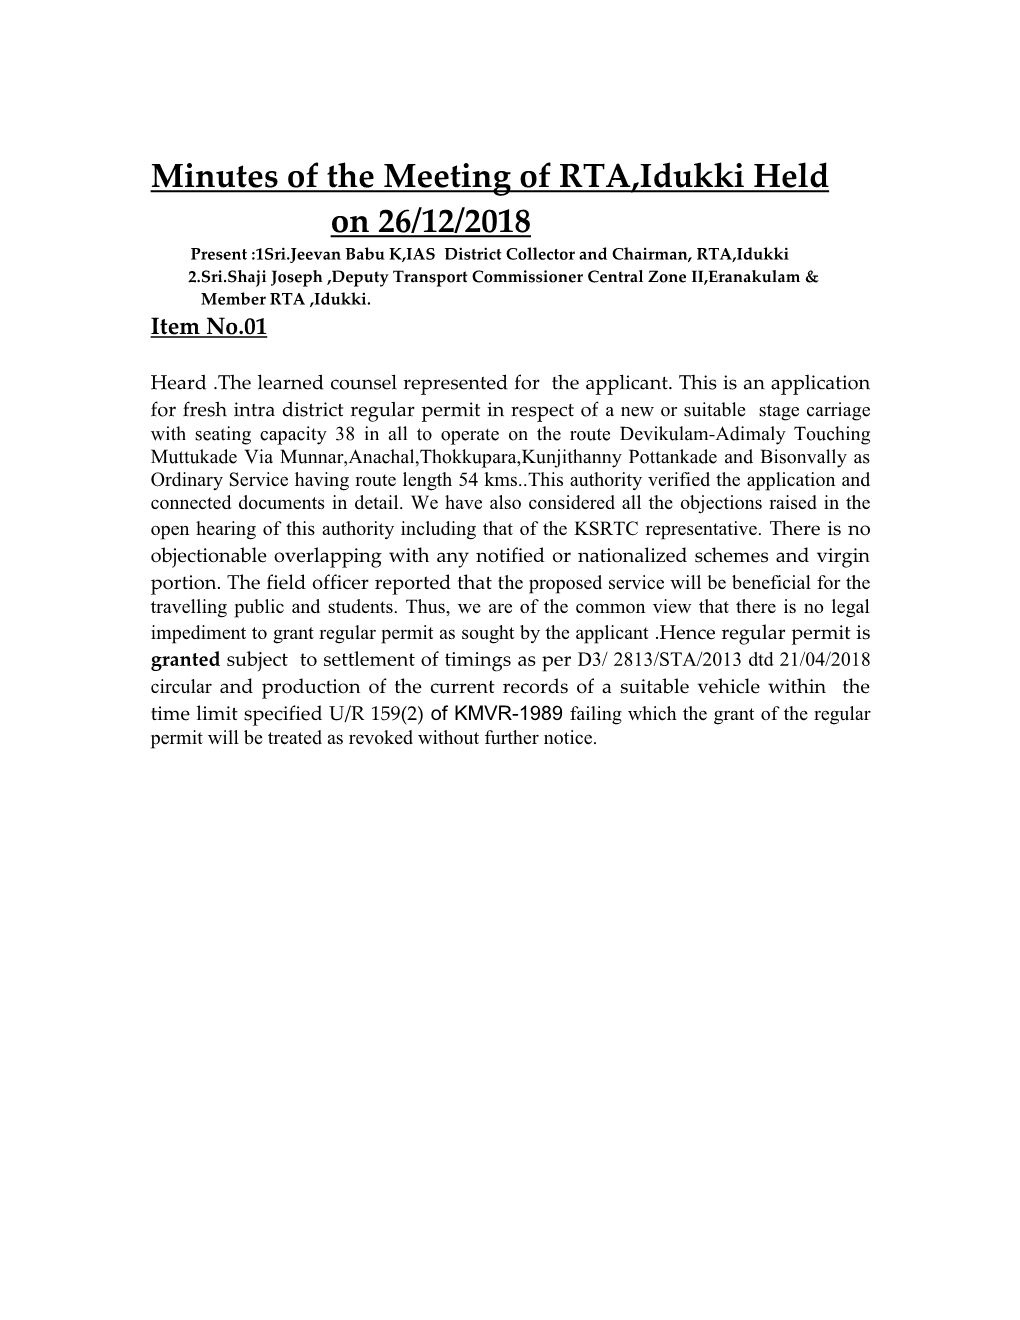 Minutes of the Meeting of RTA,Idukki Held on 26/12/2018